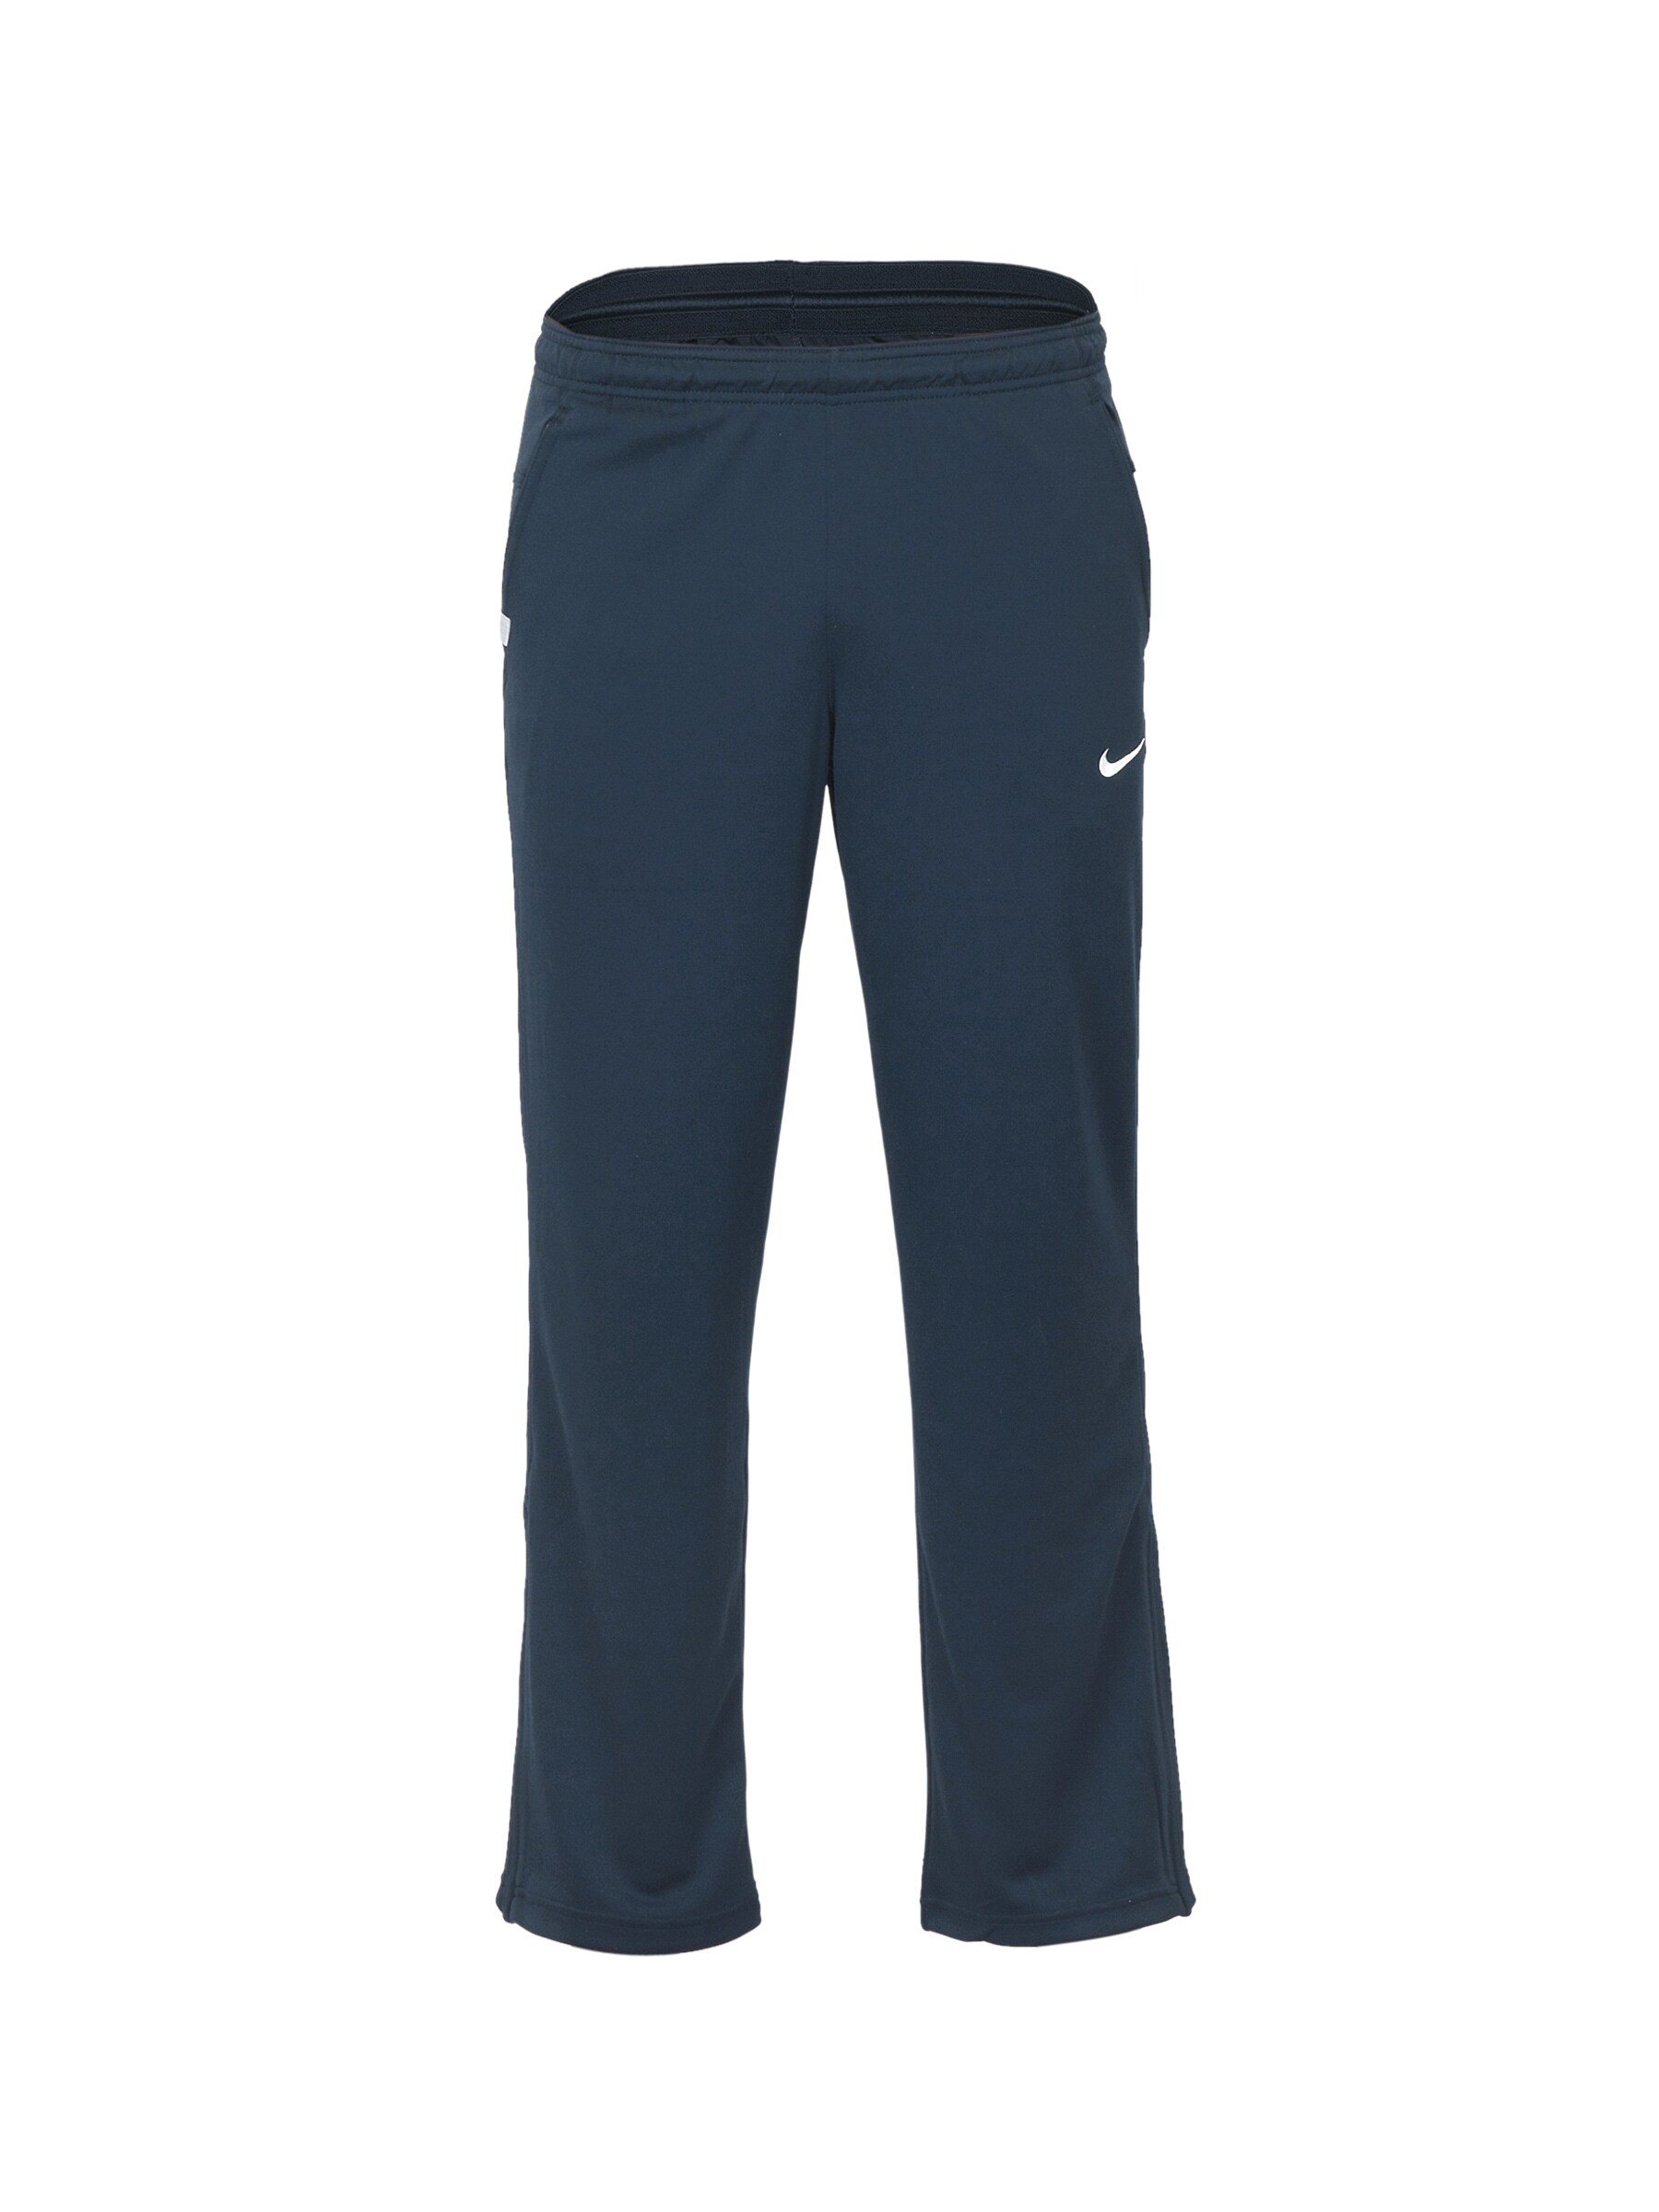 Nike Men Knit Navy Blue Track Pants